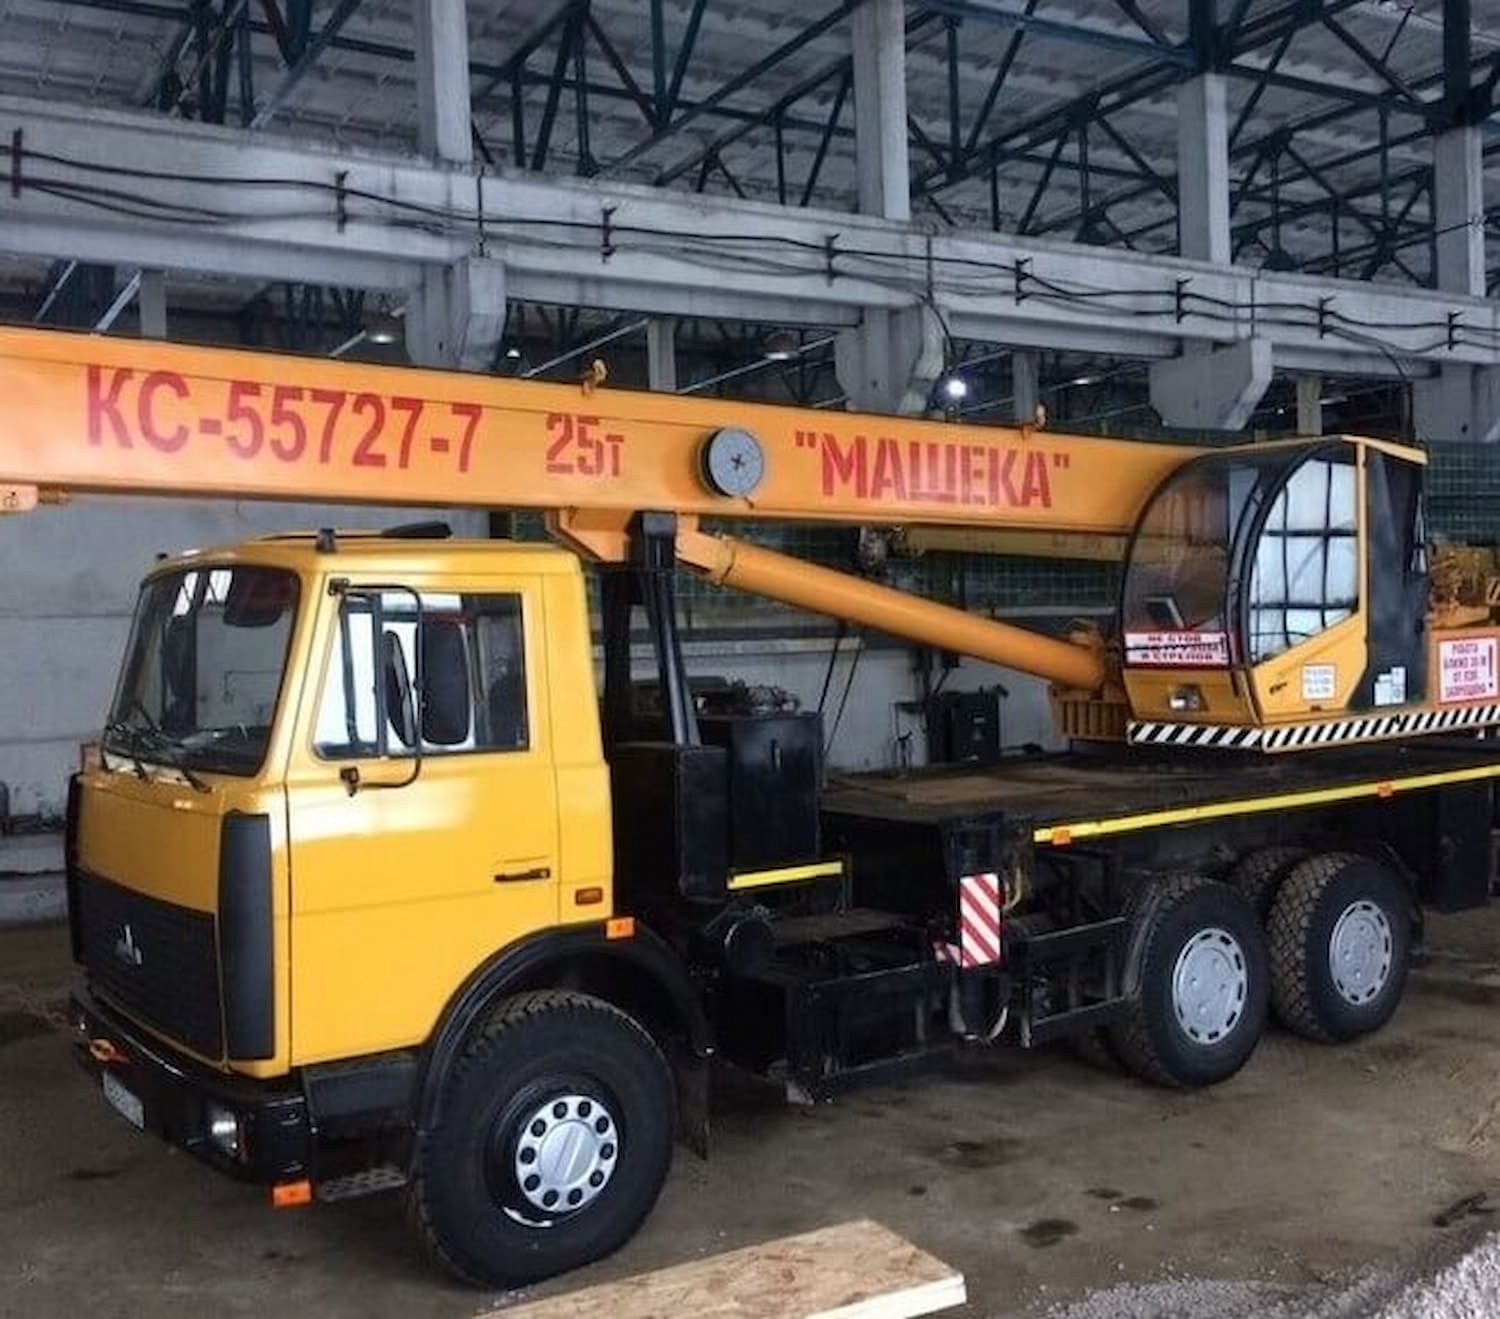 Автокран 25 тонн МАЗ Машека КС-55727-5-12